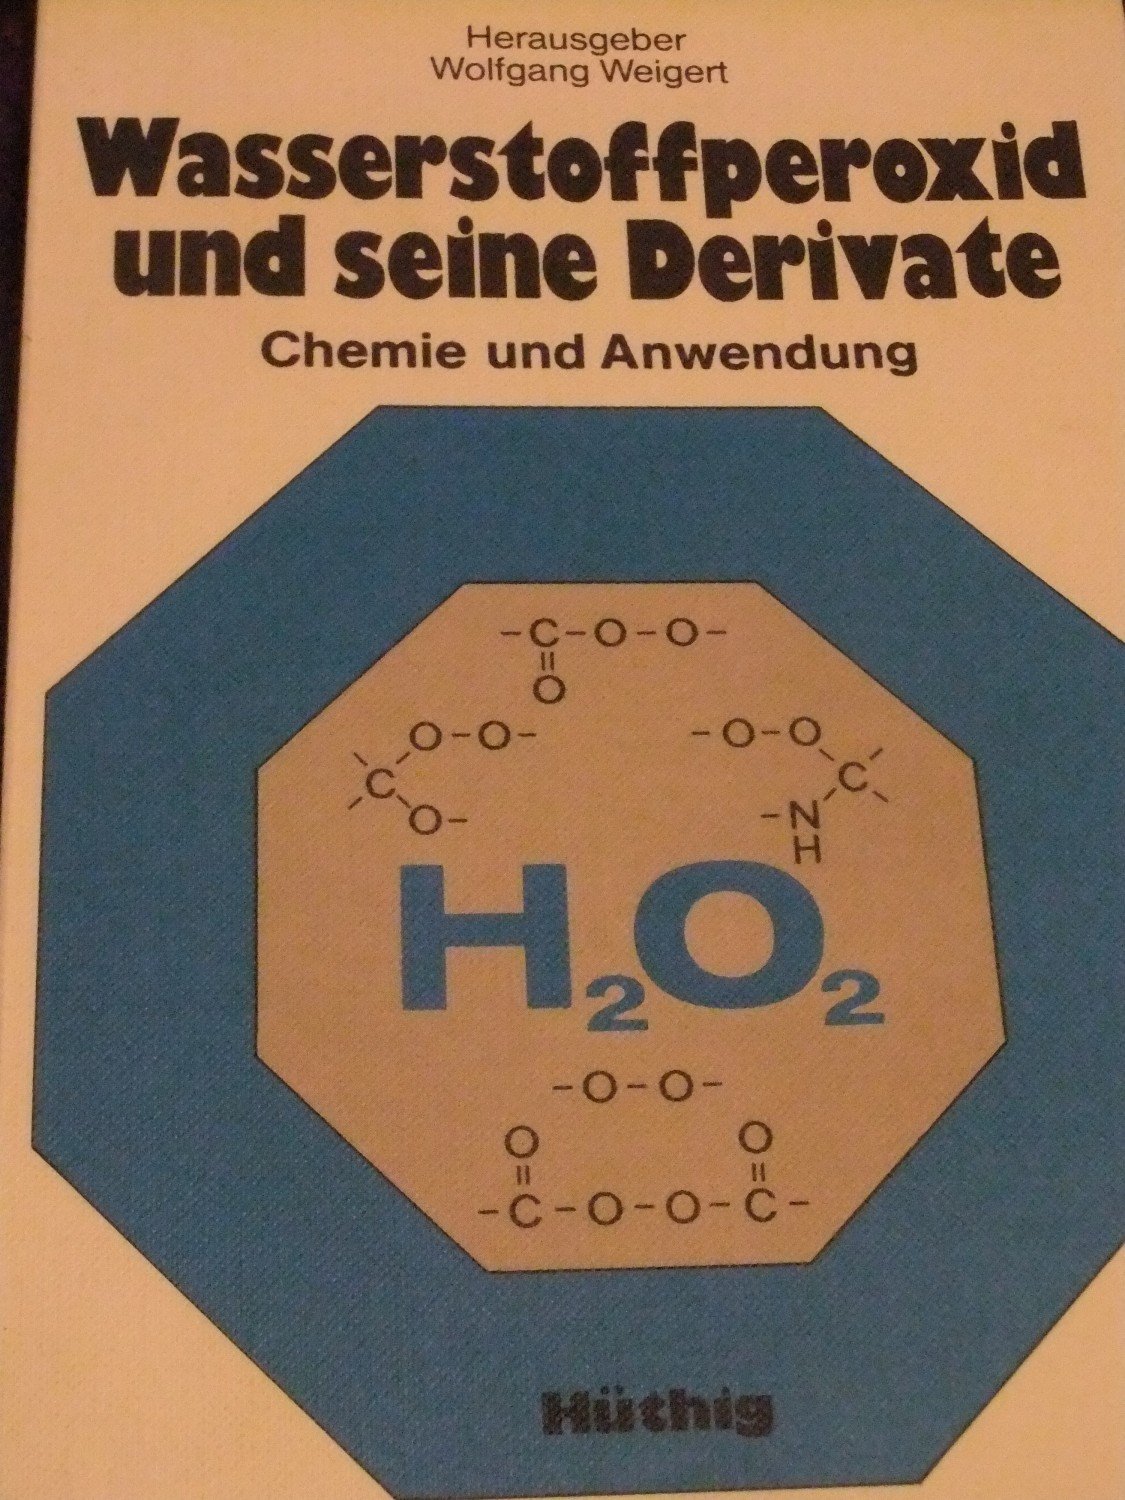 Derivate chemie